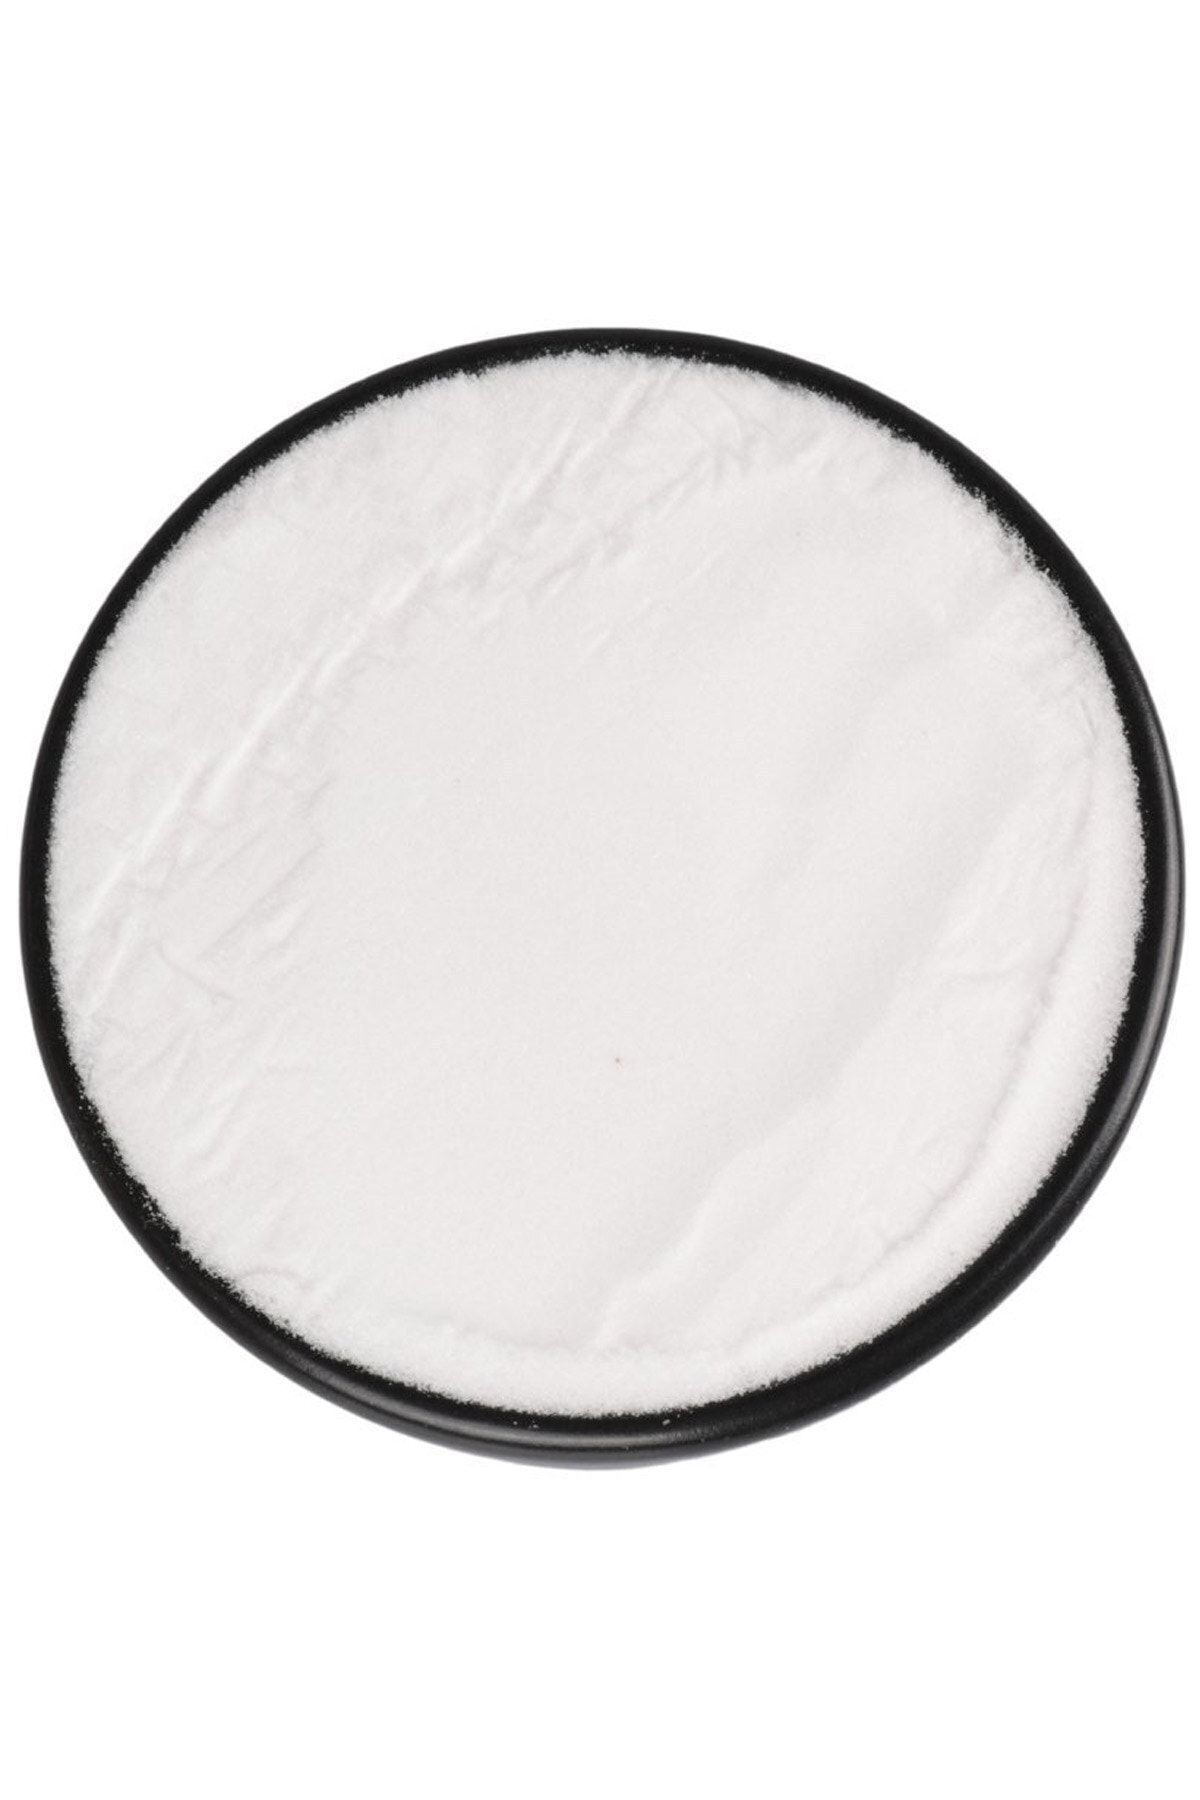 aktarix Yenilebilir Karbonat ( Sodyum Bi Karbonat ) 5 Kg